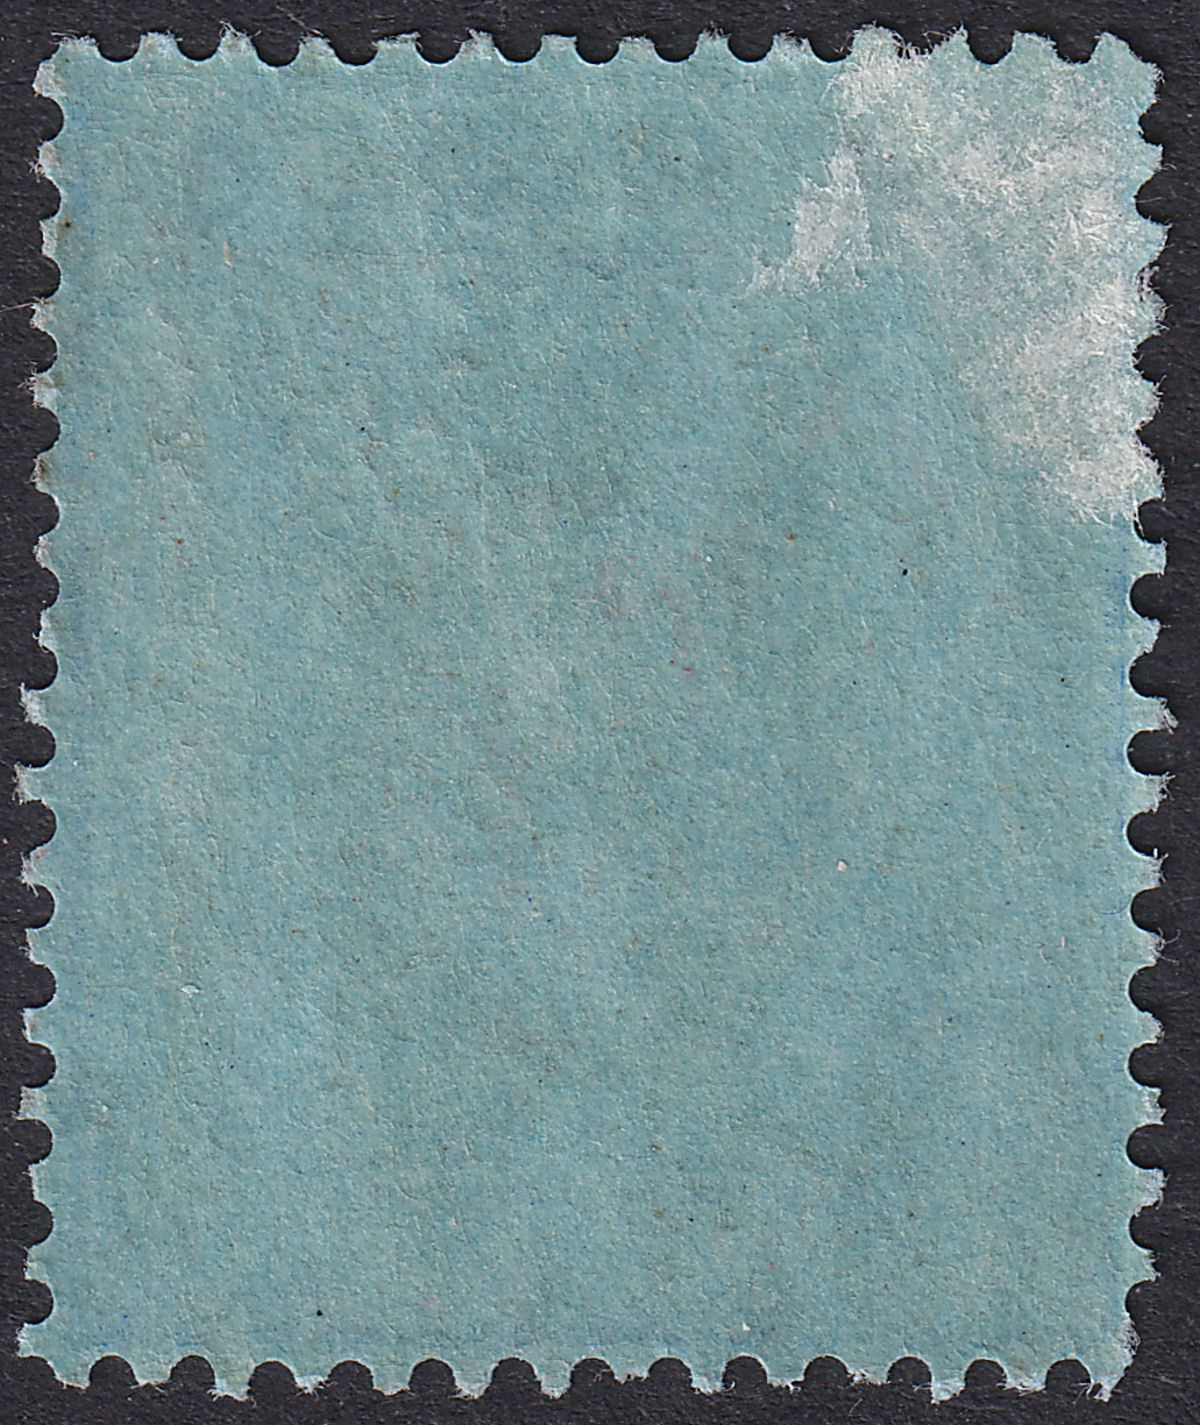 Hong Kong 1914 KGV $1 Purple and Blue on Blue Mint SG112 cat £75